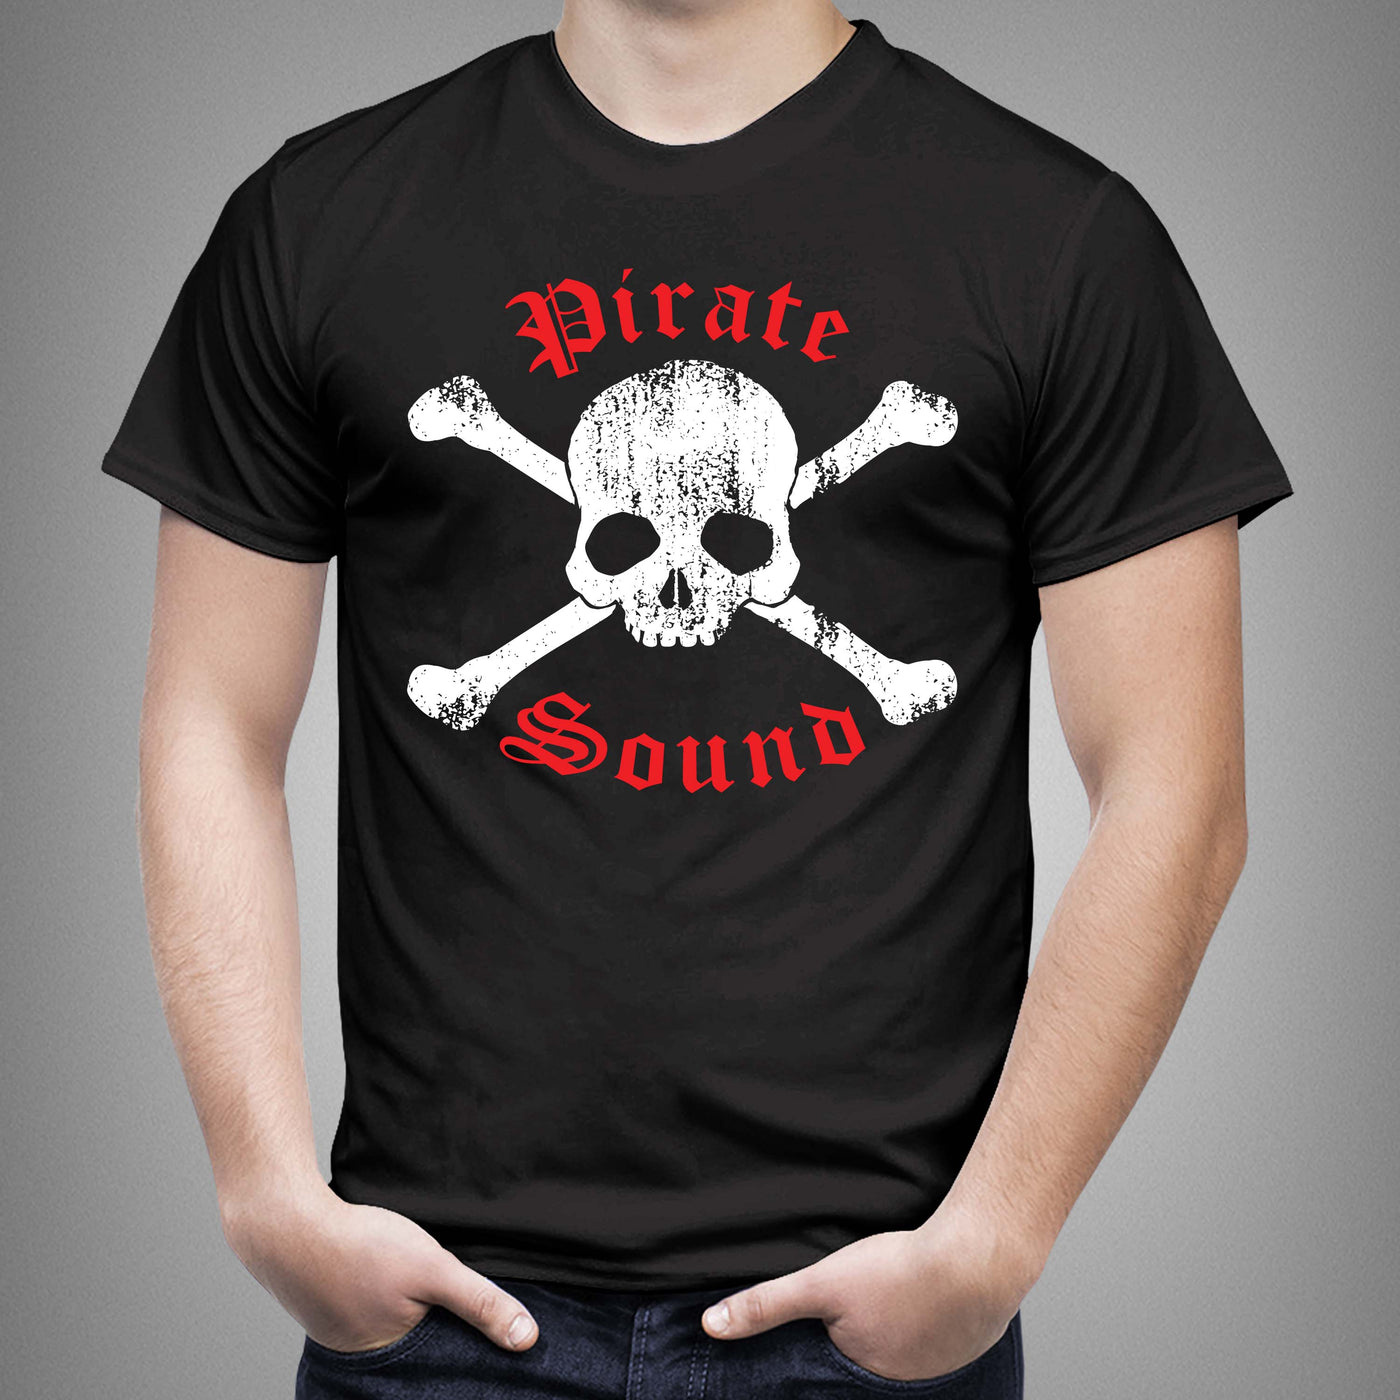 Pirate Sound